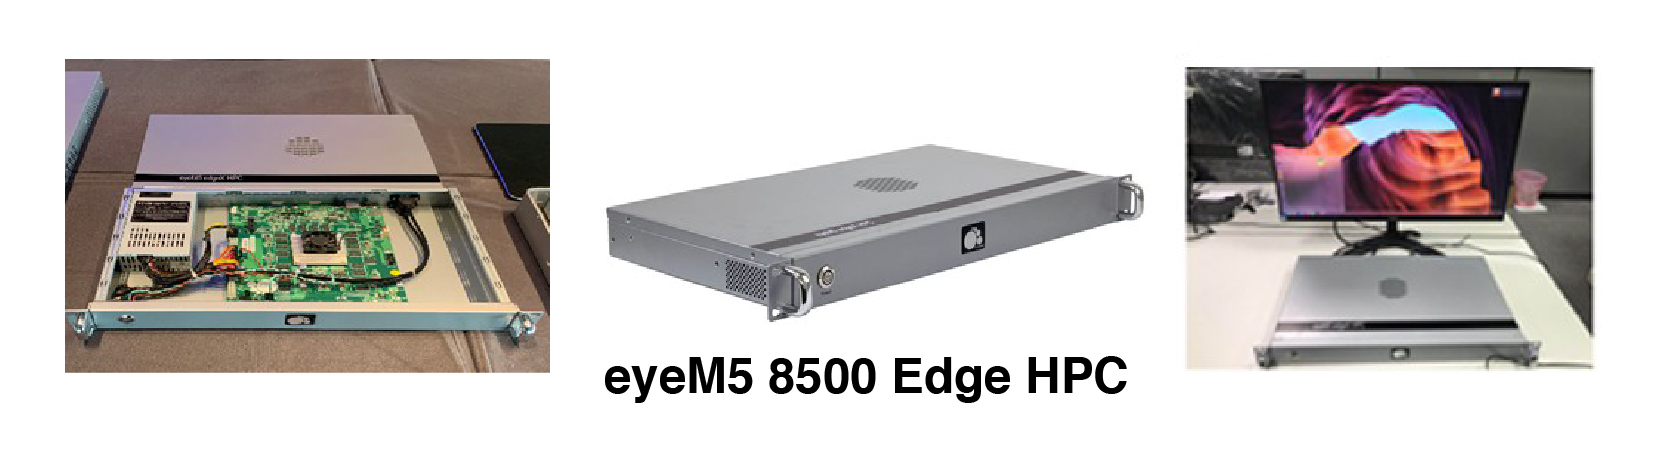 eyeM5 8500 edgeX HPC 人工智能邊緣運算器